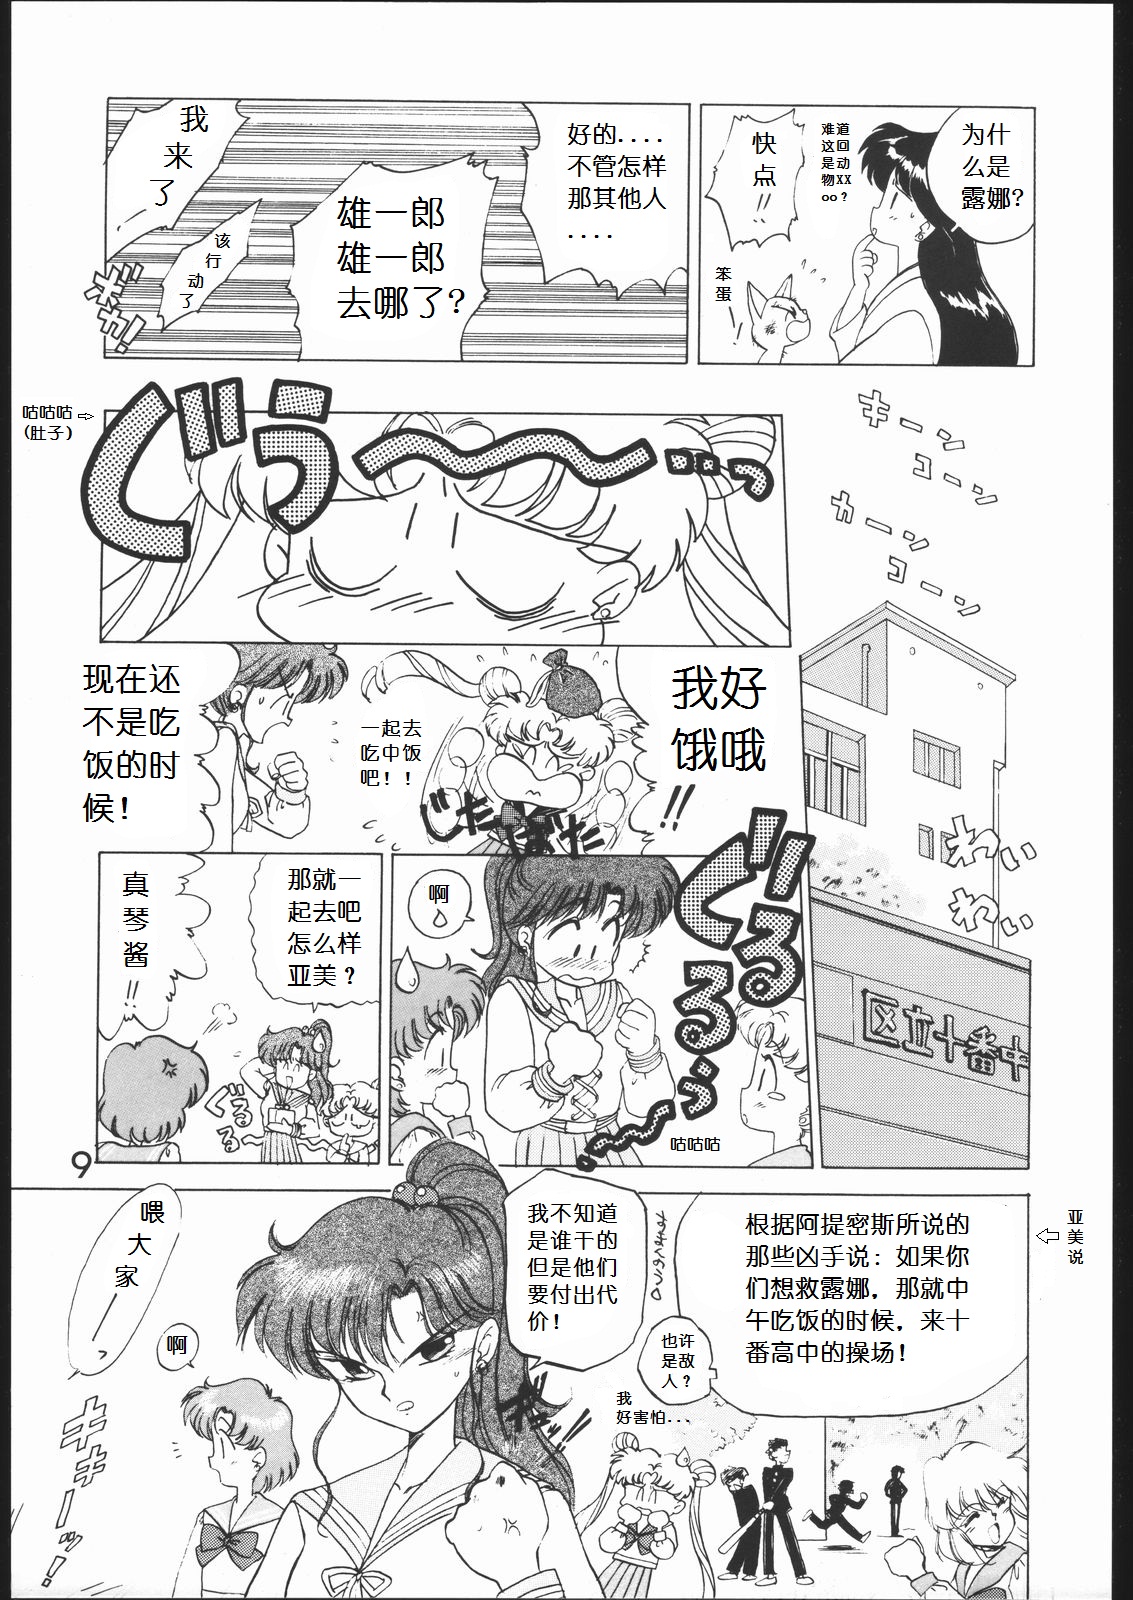 [BLACK DOG (Kuroinu Juu)] SUBMISSION MARS (Bishoujo Senshi Sailor Moon) [Chinese] [BLACK DOG (黒犬獣)] SUBMISSION MARS (美少女戦士セーラームーン) [中文翻譯]